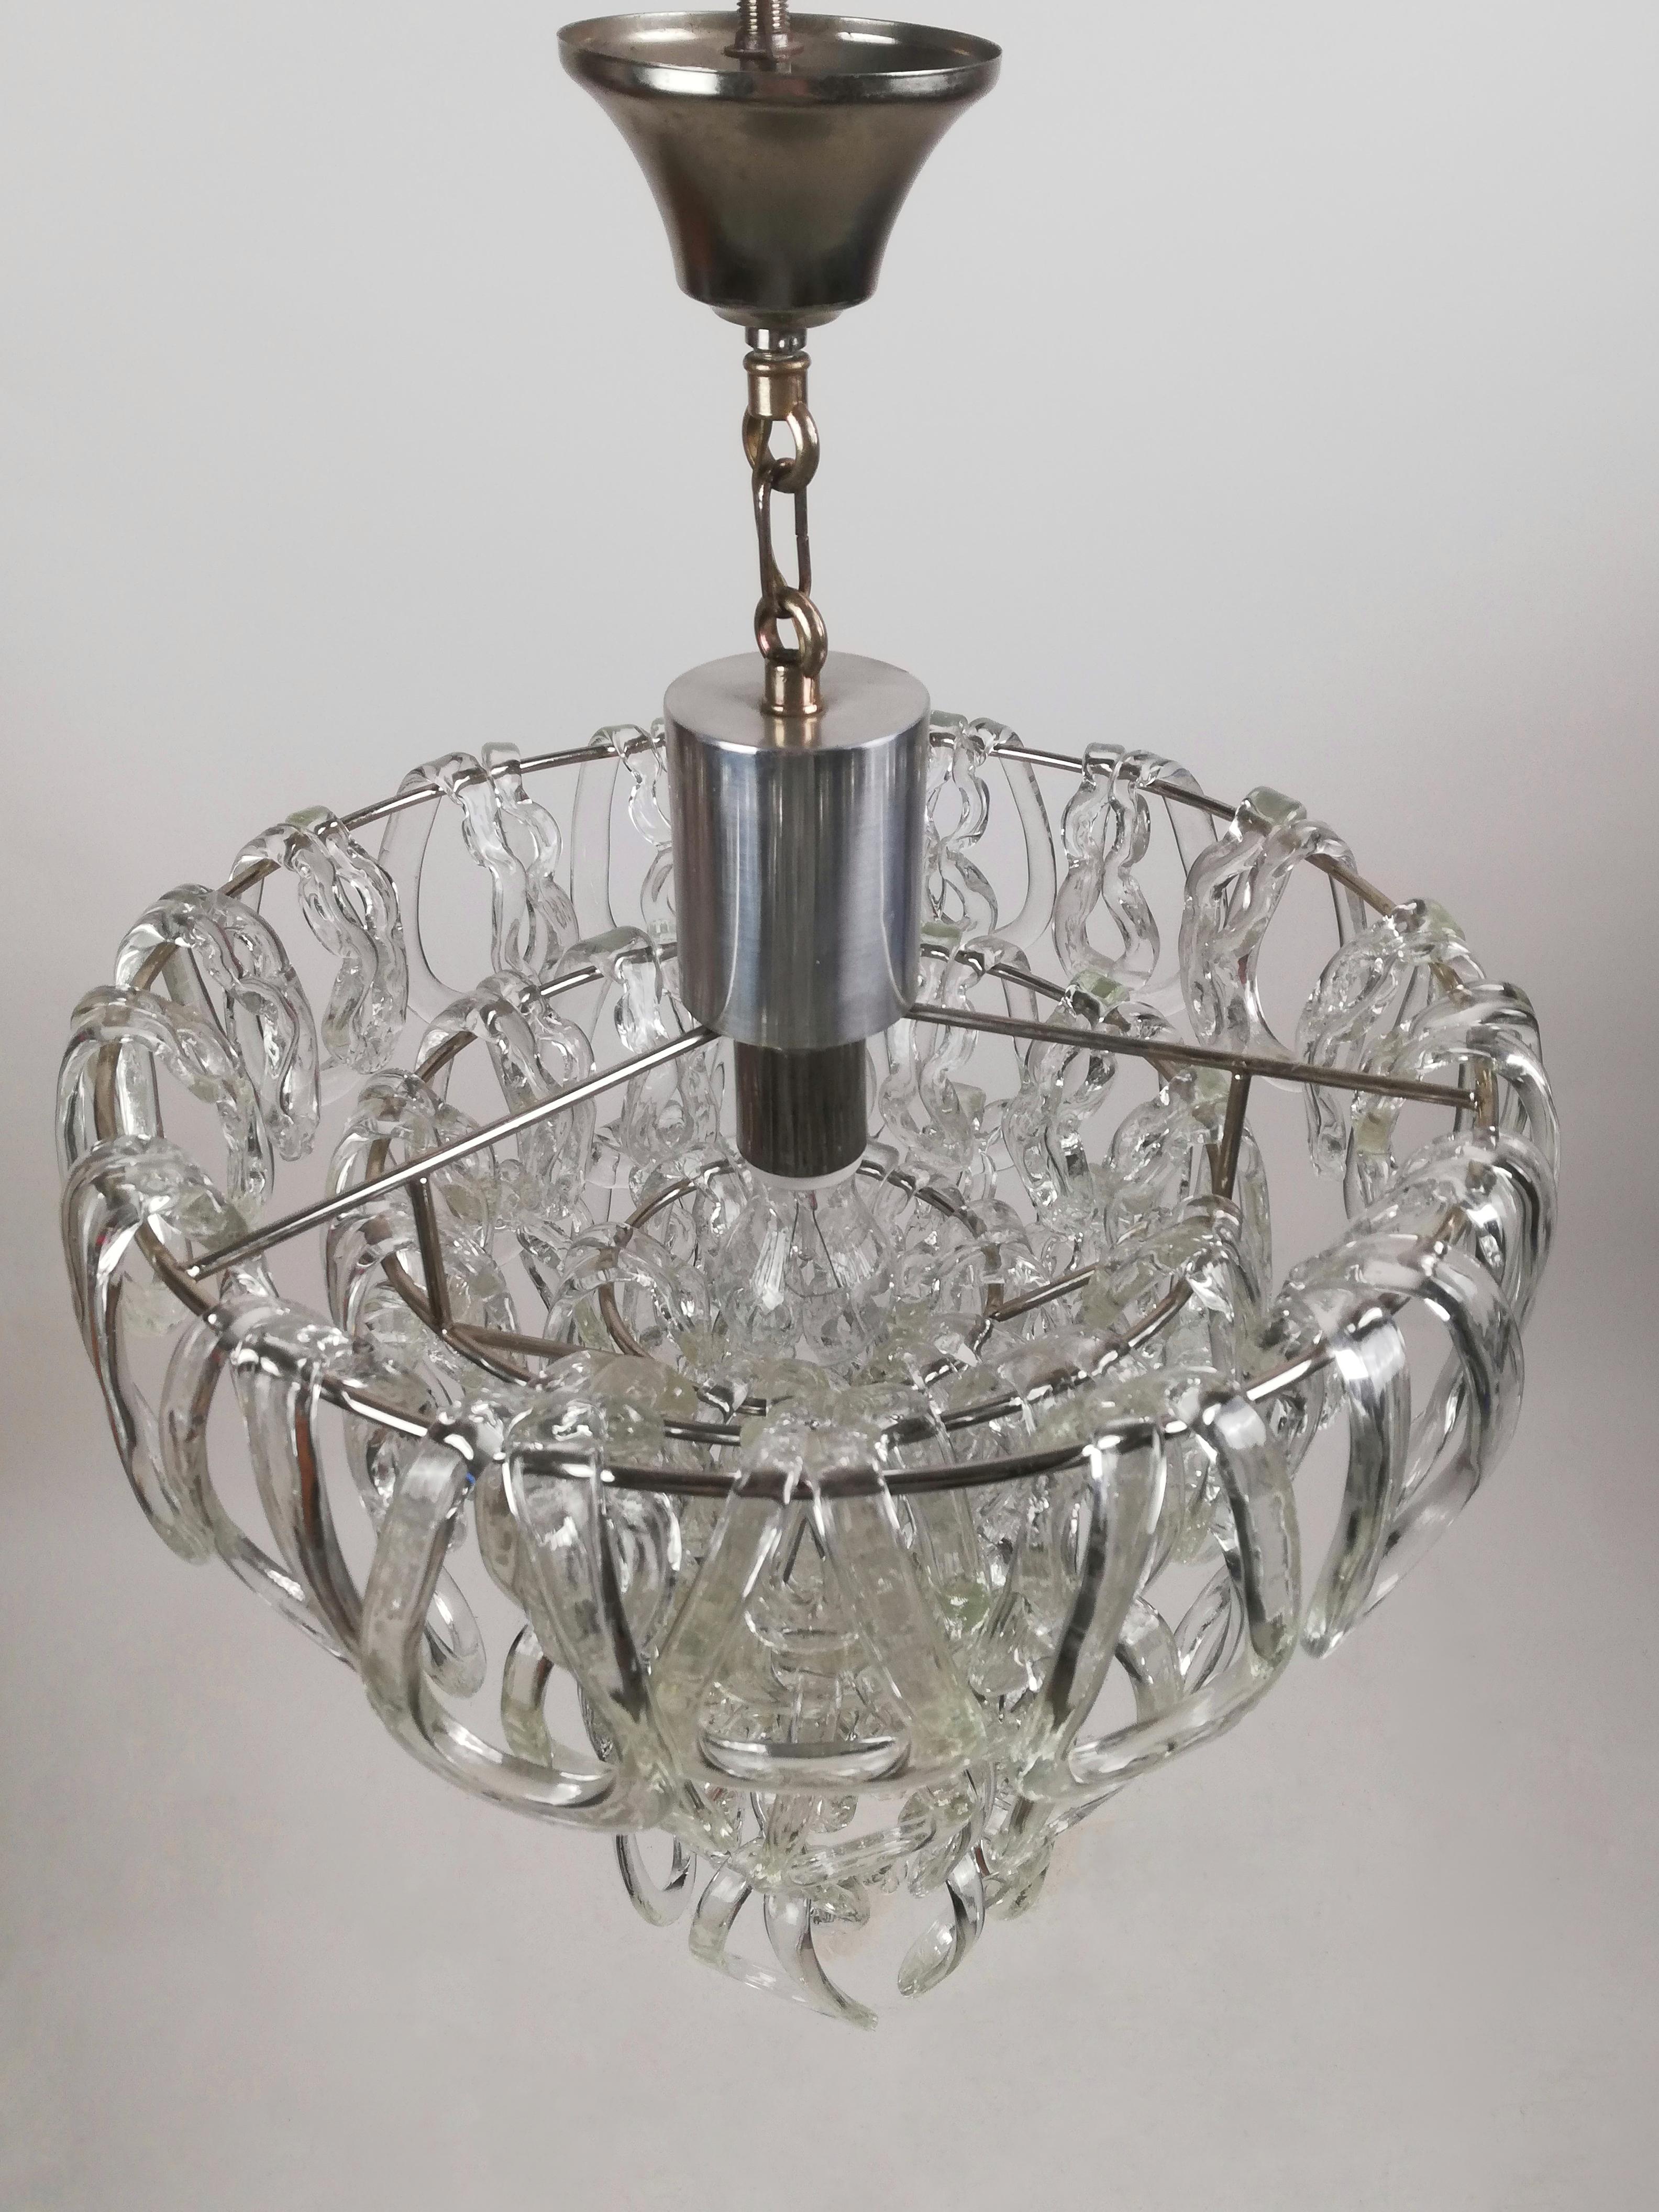 An original midcentury crystal chandelier of the series 